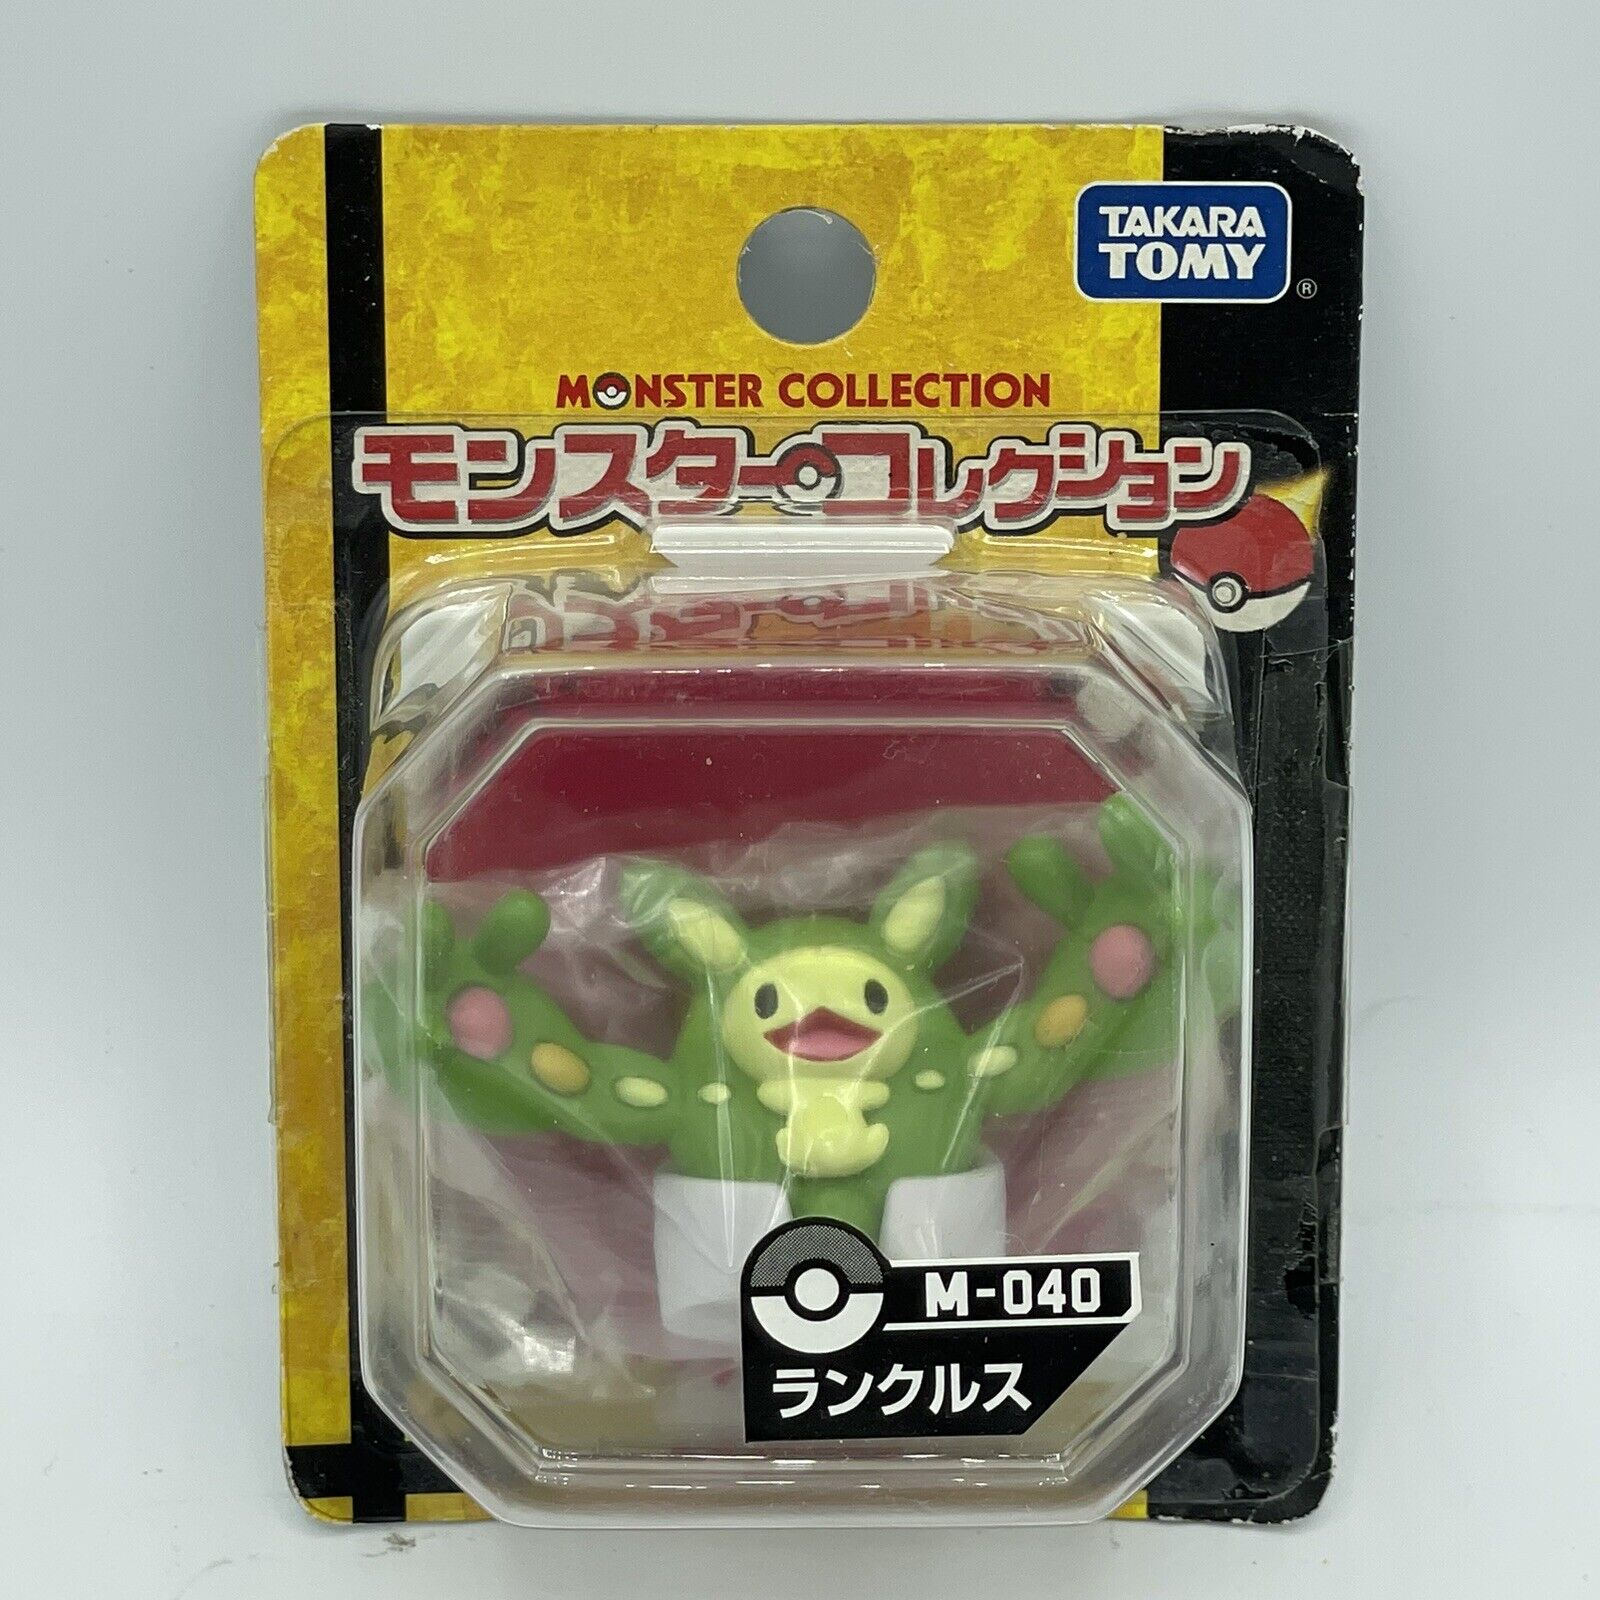 Takara Tomy Pokemon Monster Collection Reuniclus PVC Figure Sealed M-040 On Card